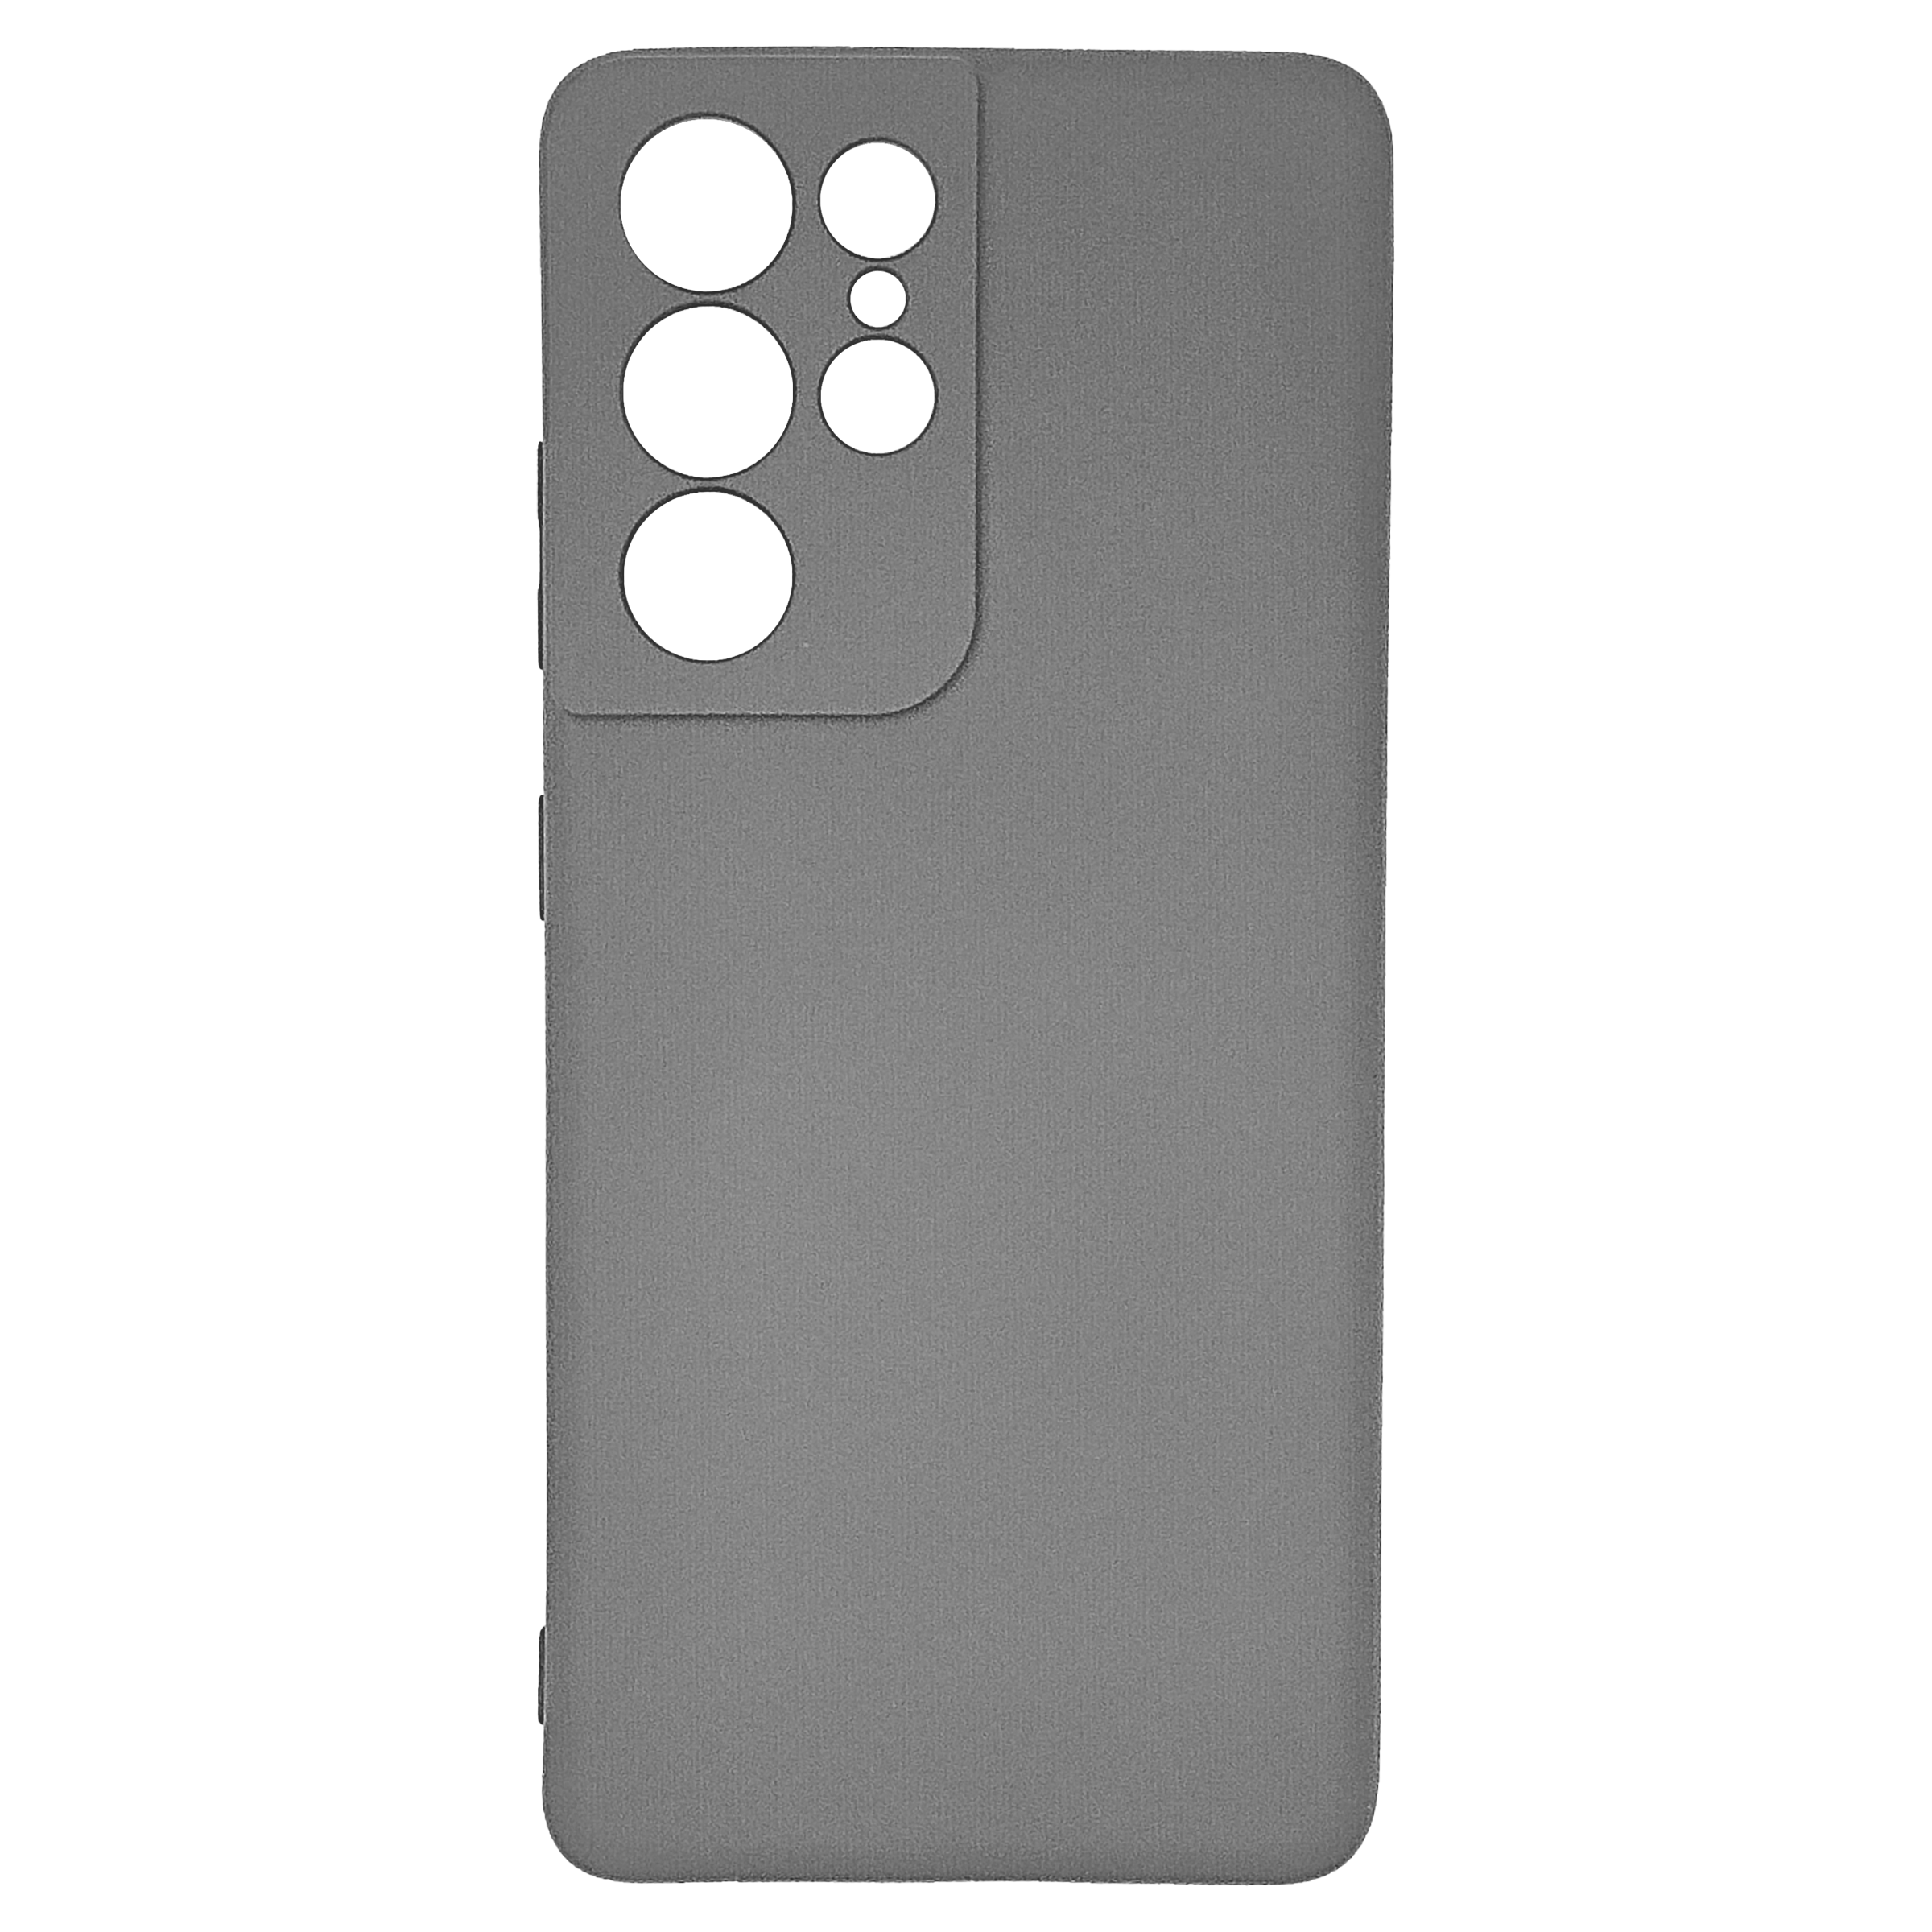 Soundrevo - Soundrevo TPU Back Case For samsung Galaxy S21 Ultra (Anti-Slip, C021U, Grey)